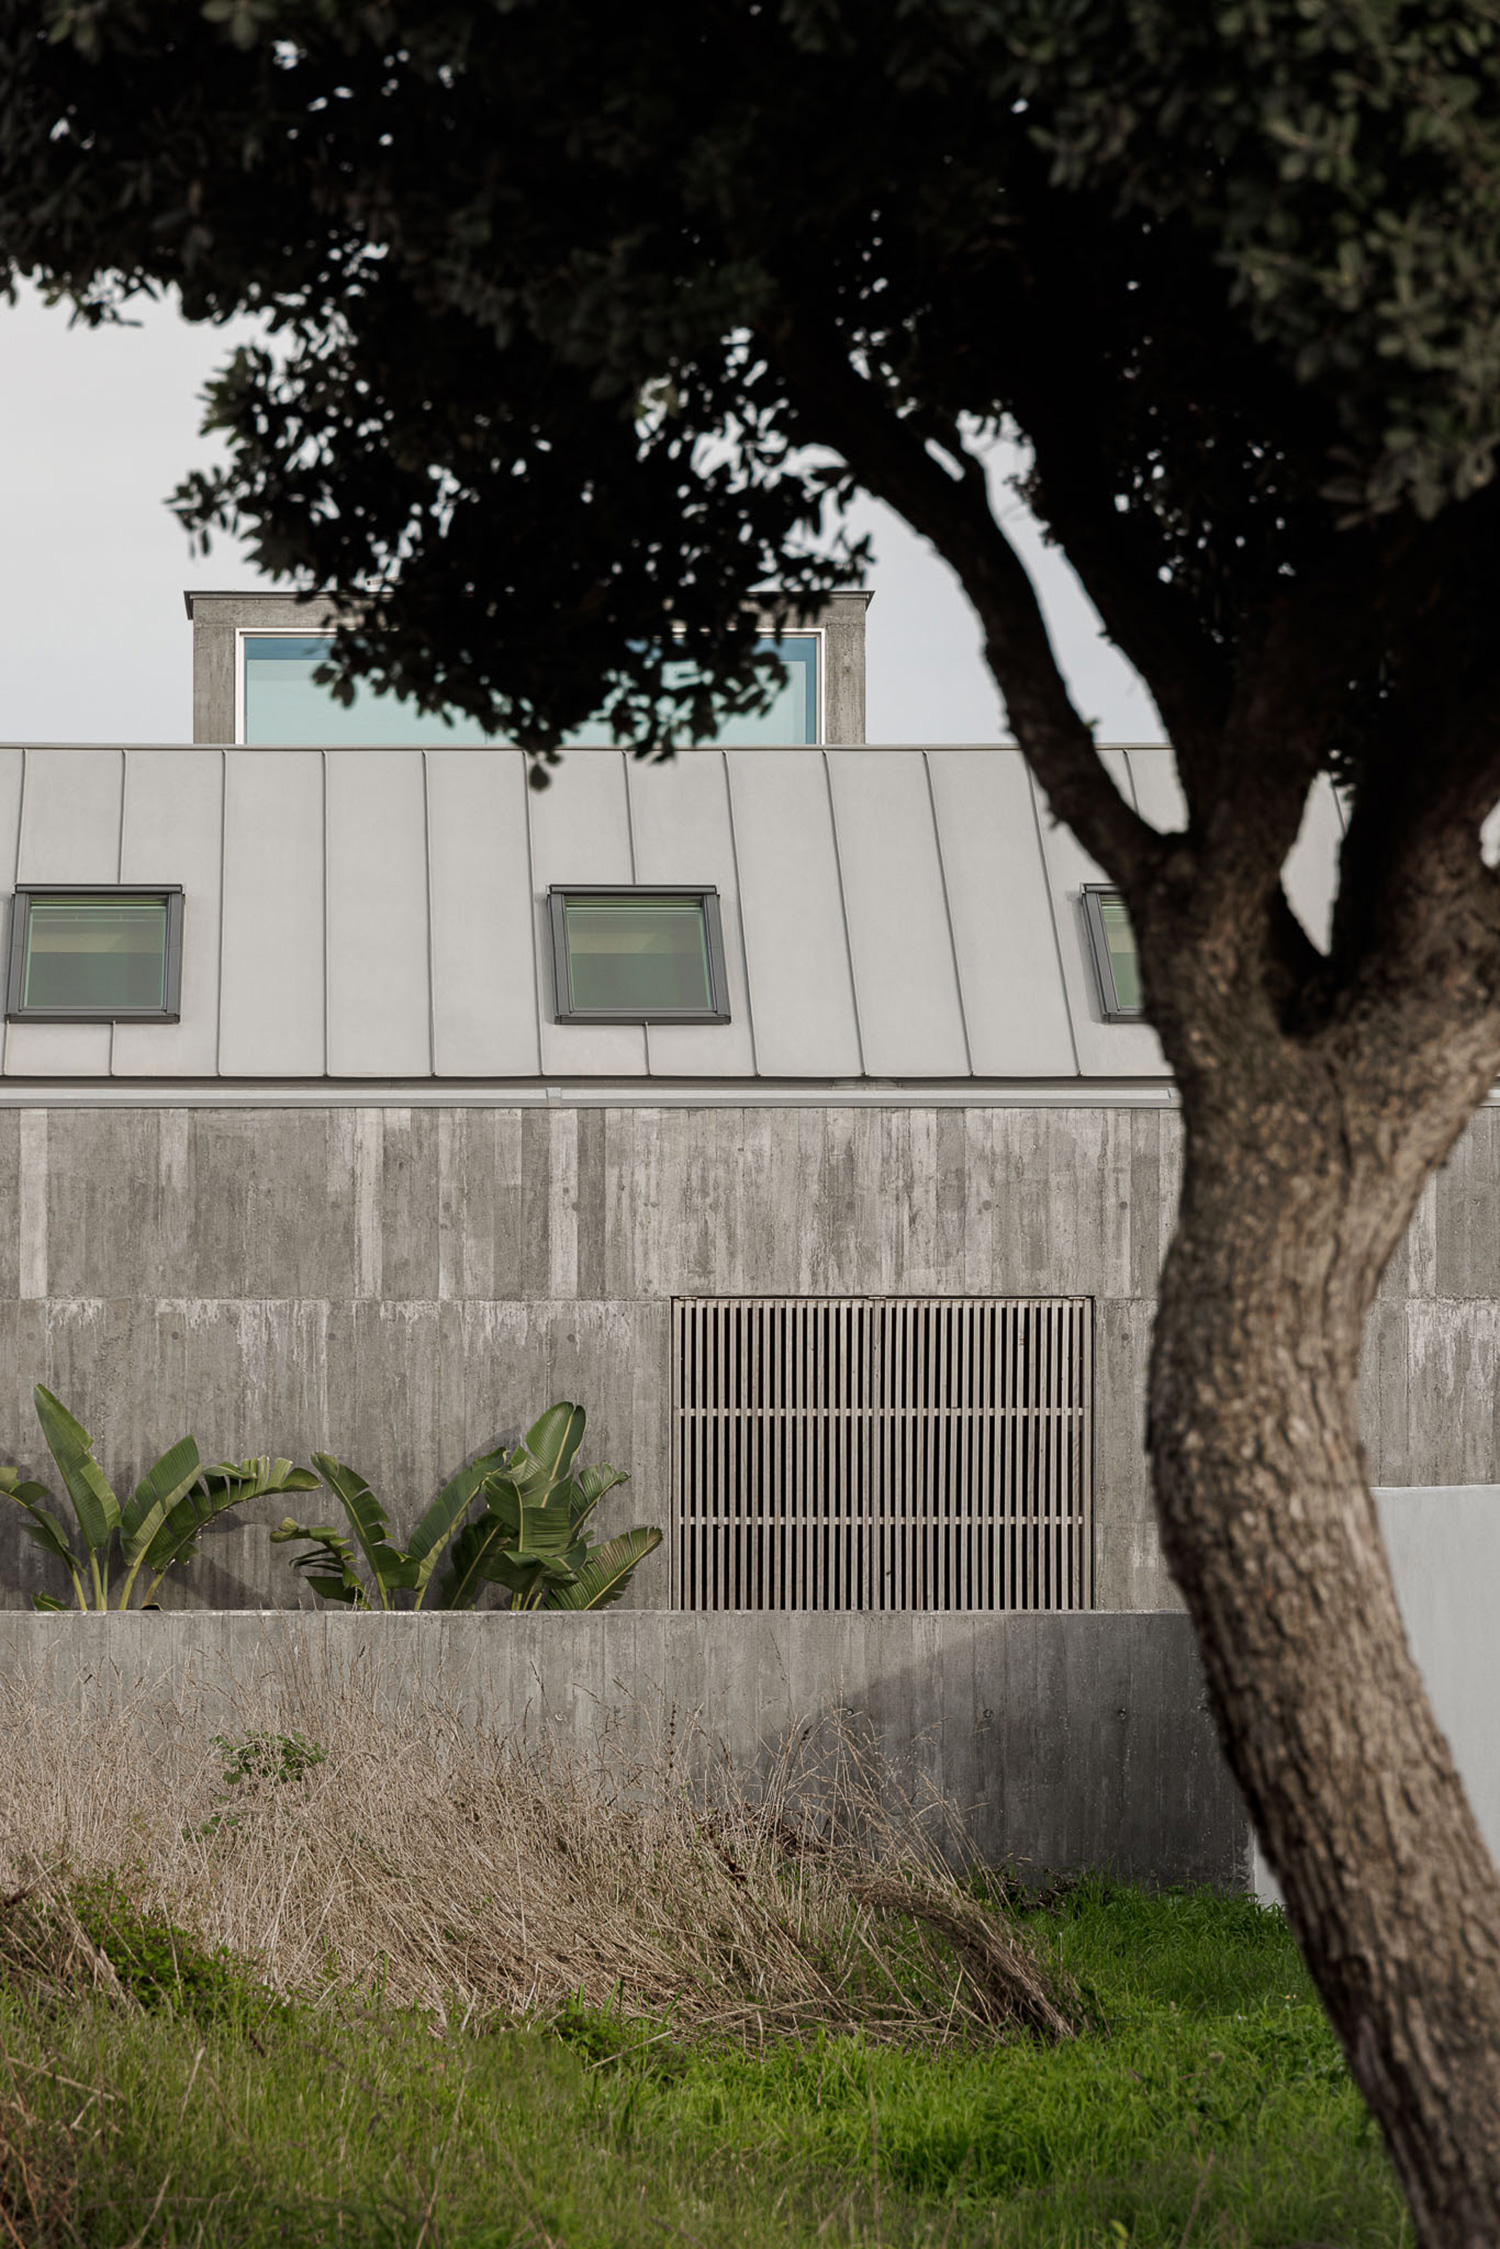 Palheiro, A Modern Take on A Fisherman's House - Gessato